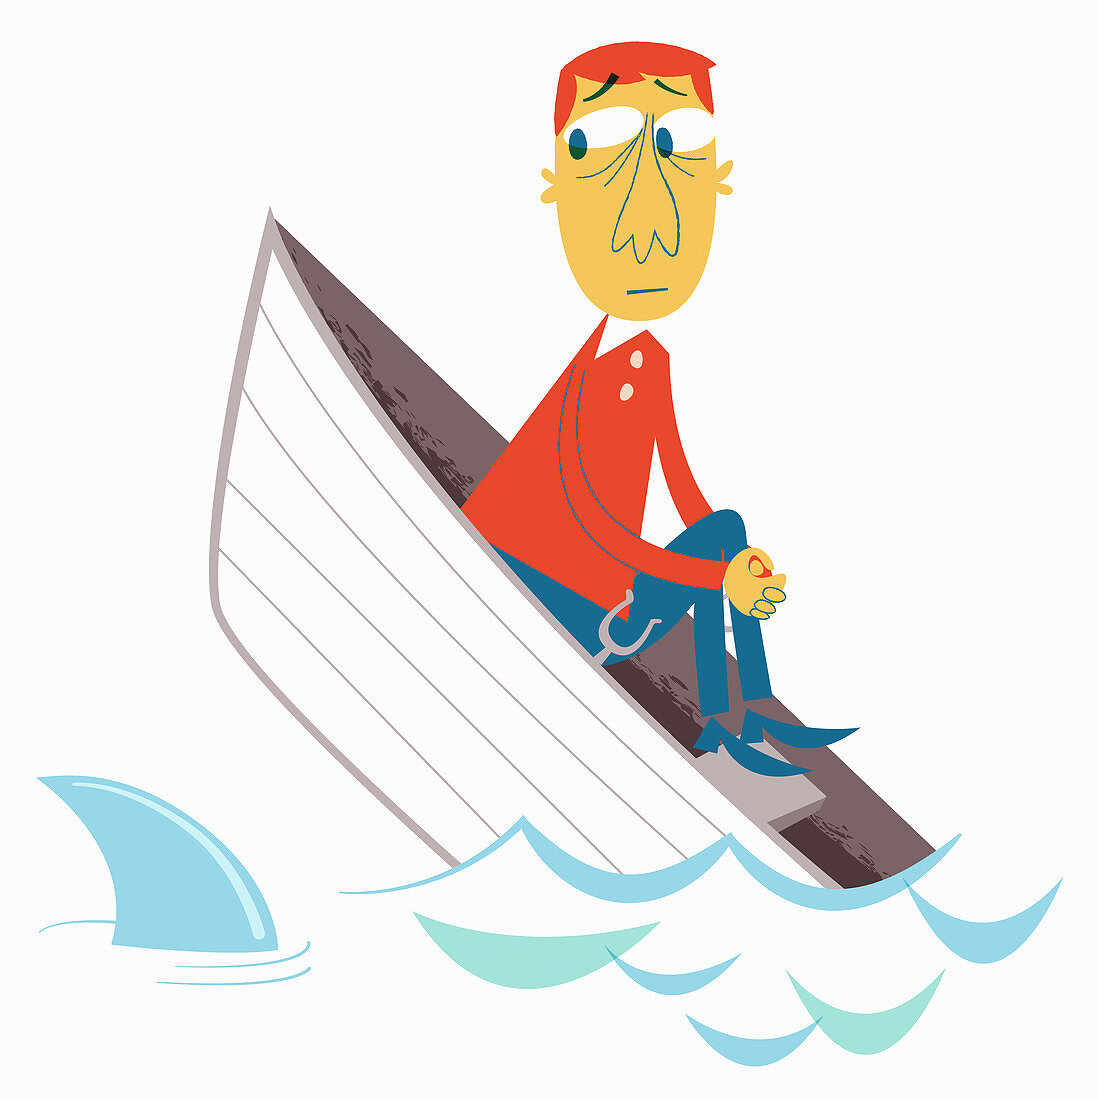 Anxious man in sinking boat, illustration